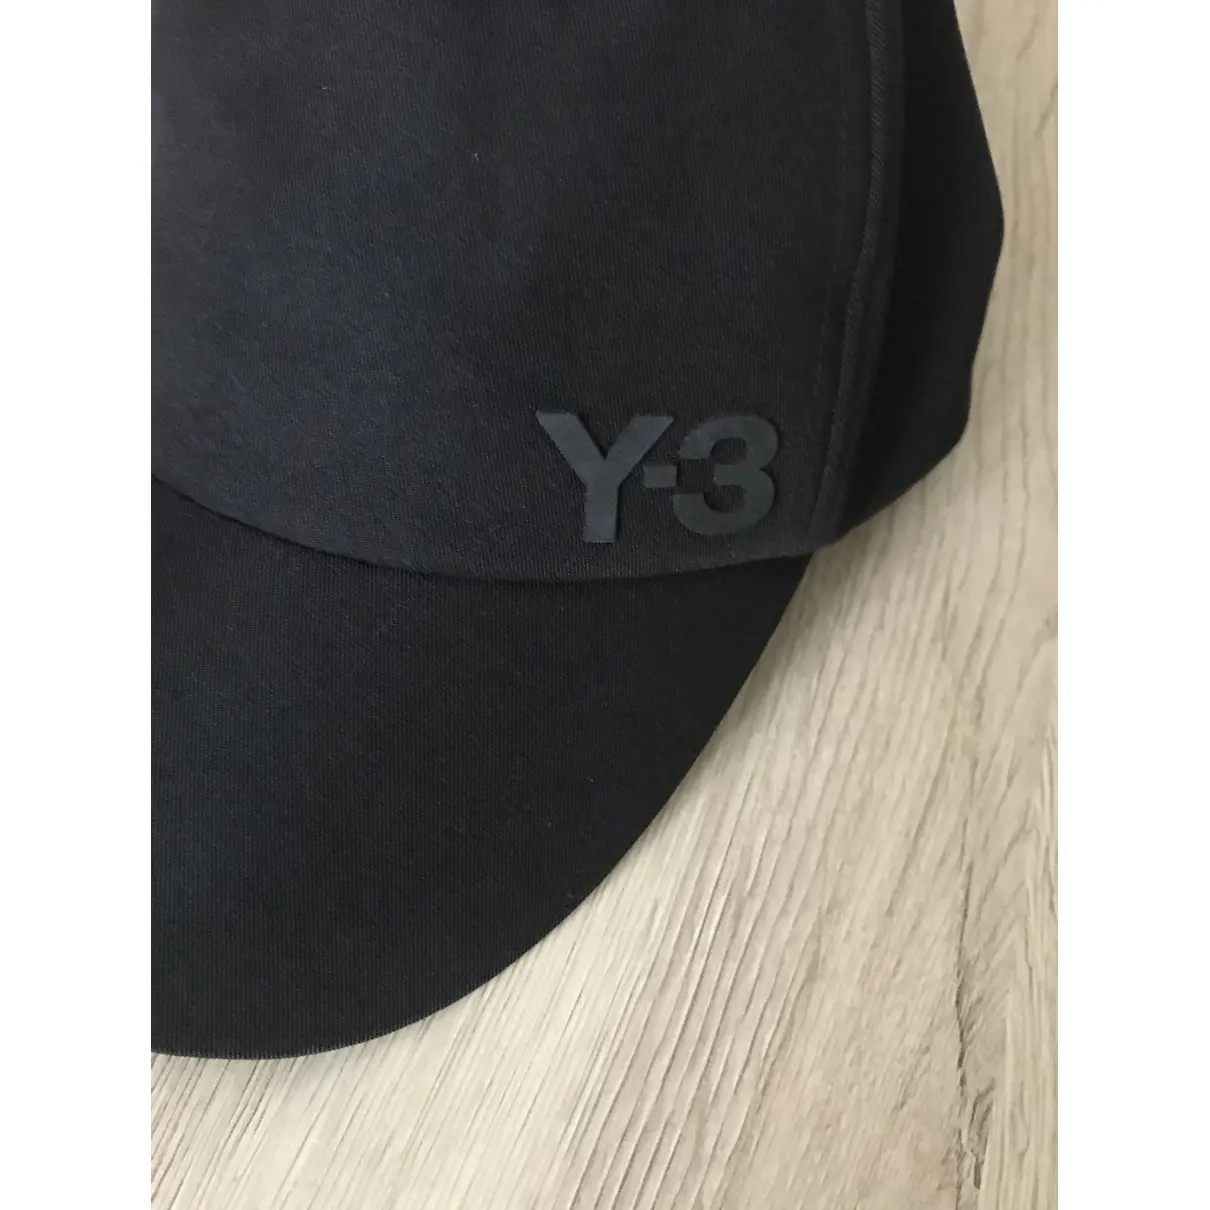 Buy Y-3 Hat online